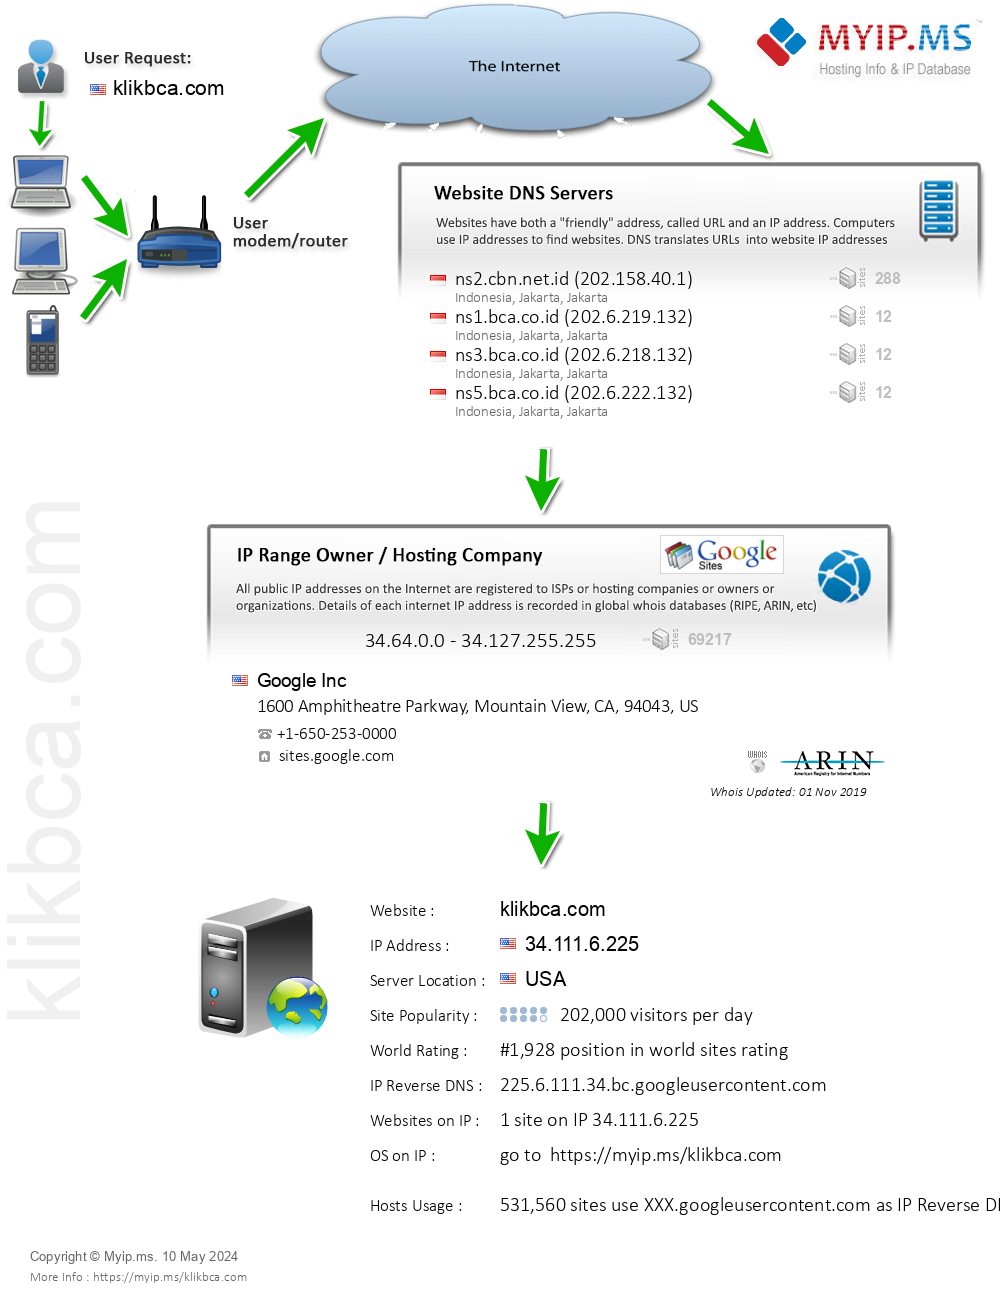 Klikbca.com - Website Hosting Visual IP Diagram